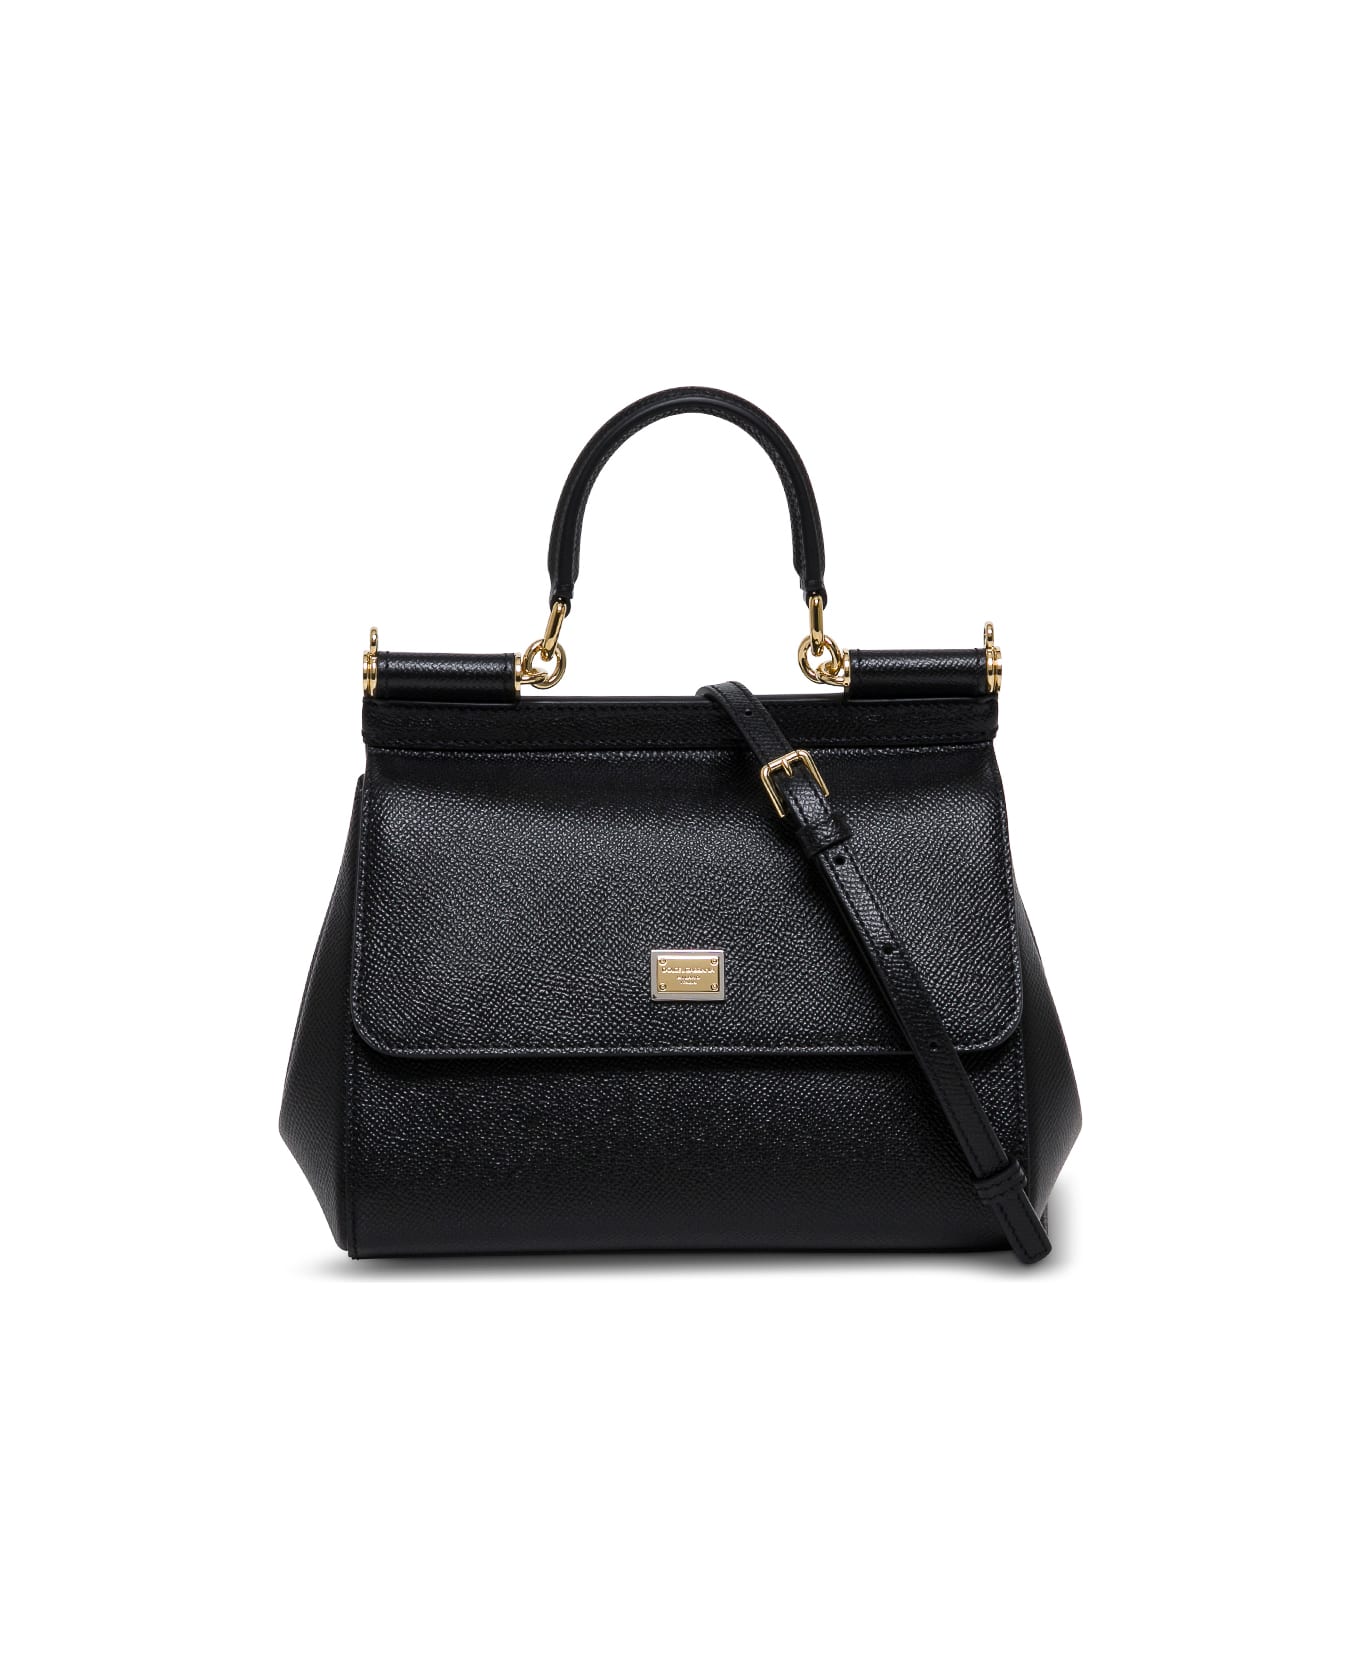 Dolce & Gabbana Woman's Sicily Dauphine Leather Handbag - Black